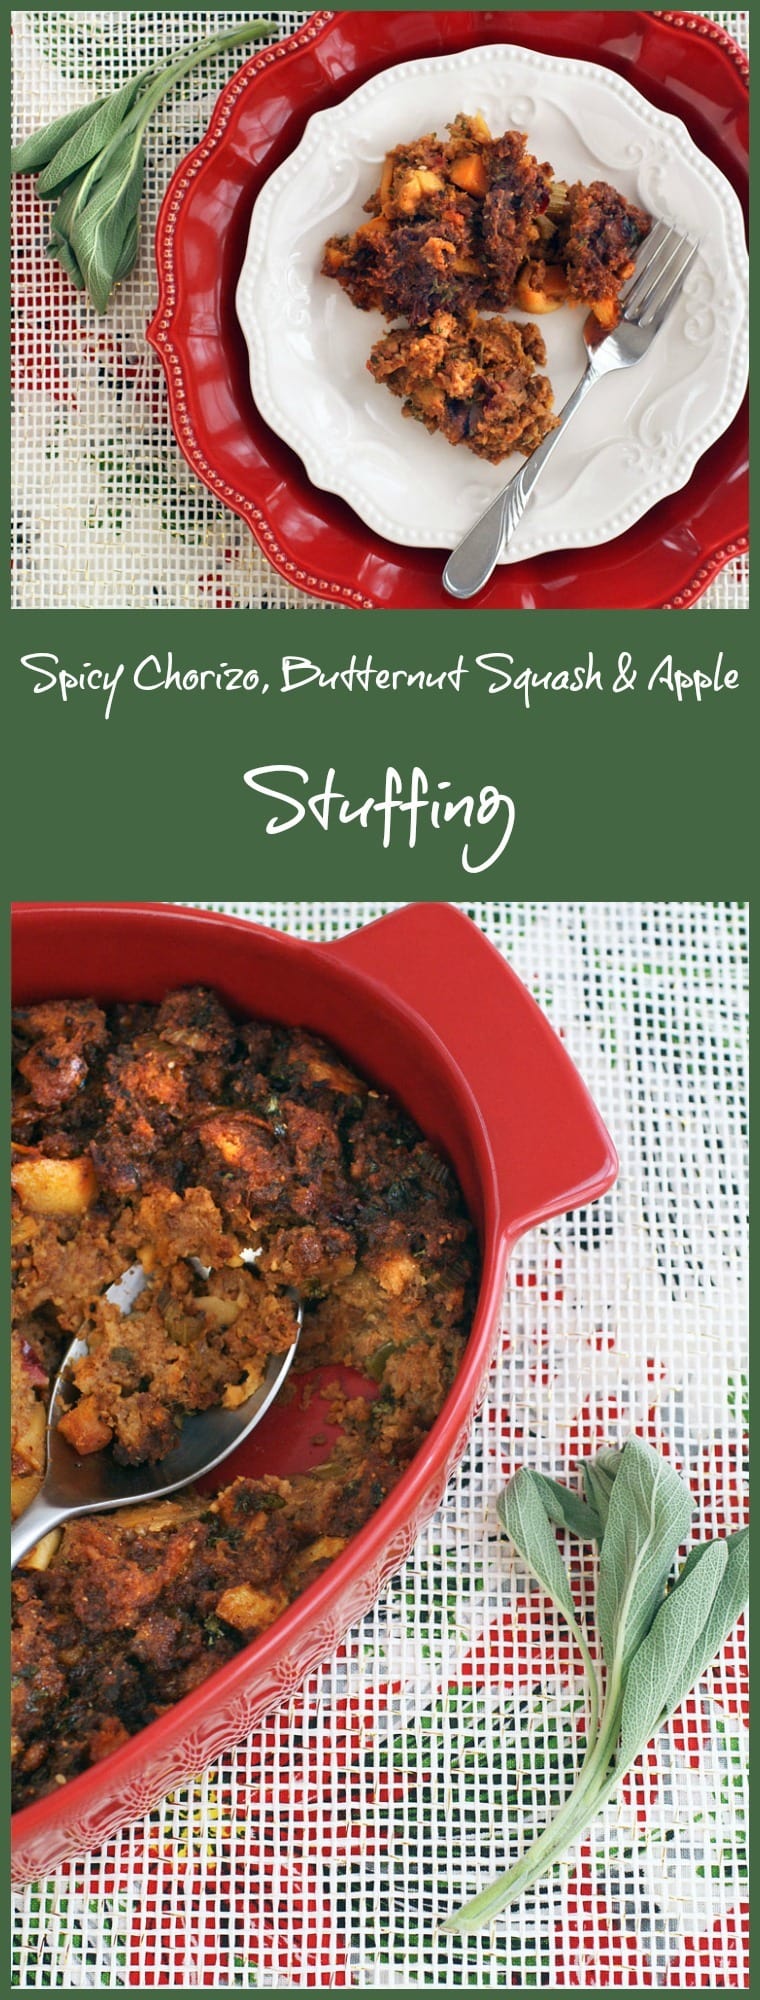 Spicy Chorizo, Butternut Squash & Apple Stuffing